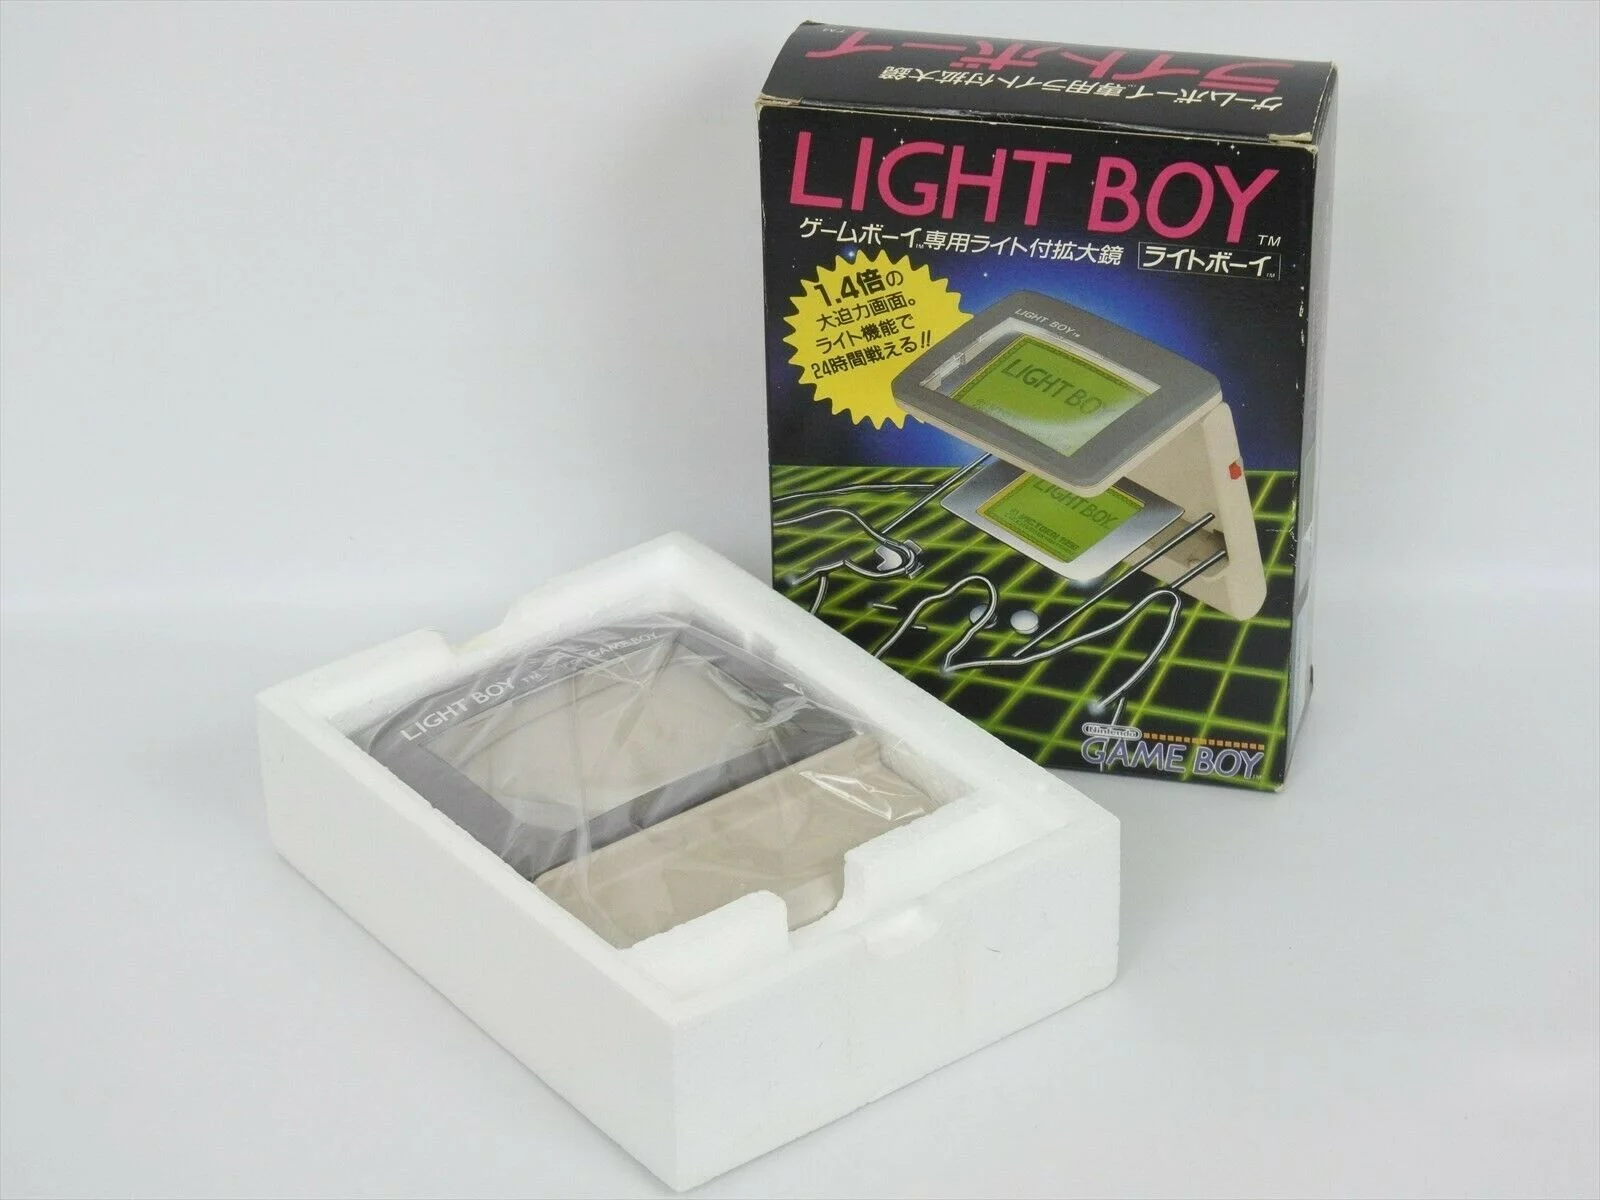  Nintendo Game Boy LightBoy